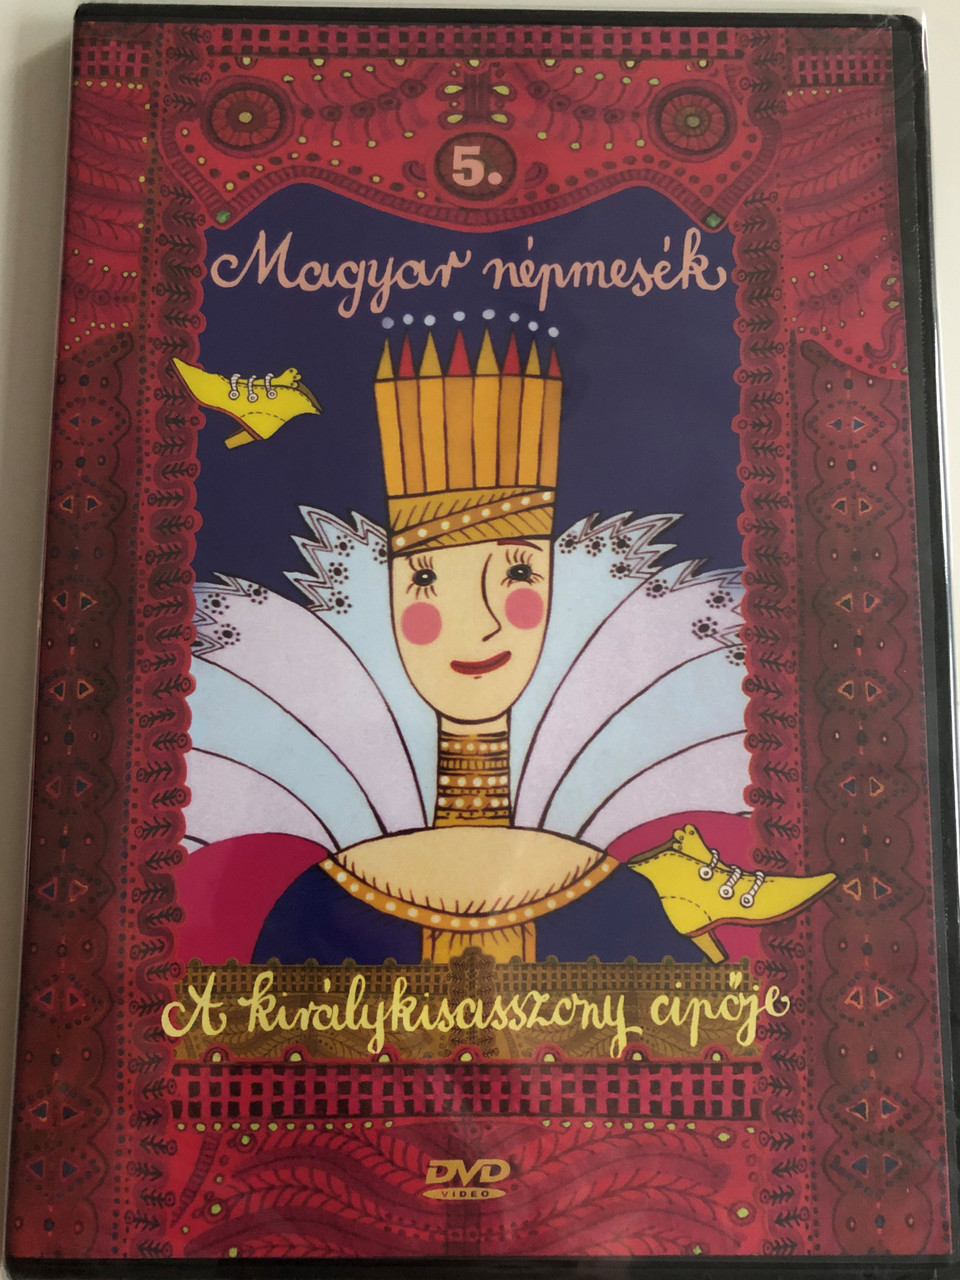 Magyar Népmesék 5. - A királykisasszony cipője DVD 1995 - 1996 Hungarian  Folk Tales for Children / Directed by Jankovics Marcell, Horváth Mária /  Read by Szabó Gyula / 13 episodes on disc - Bible in My Language